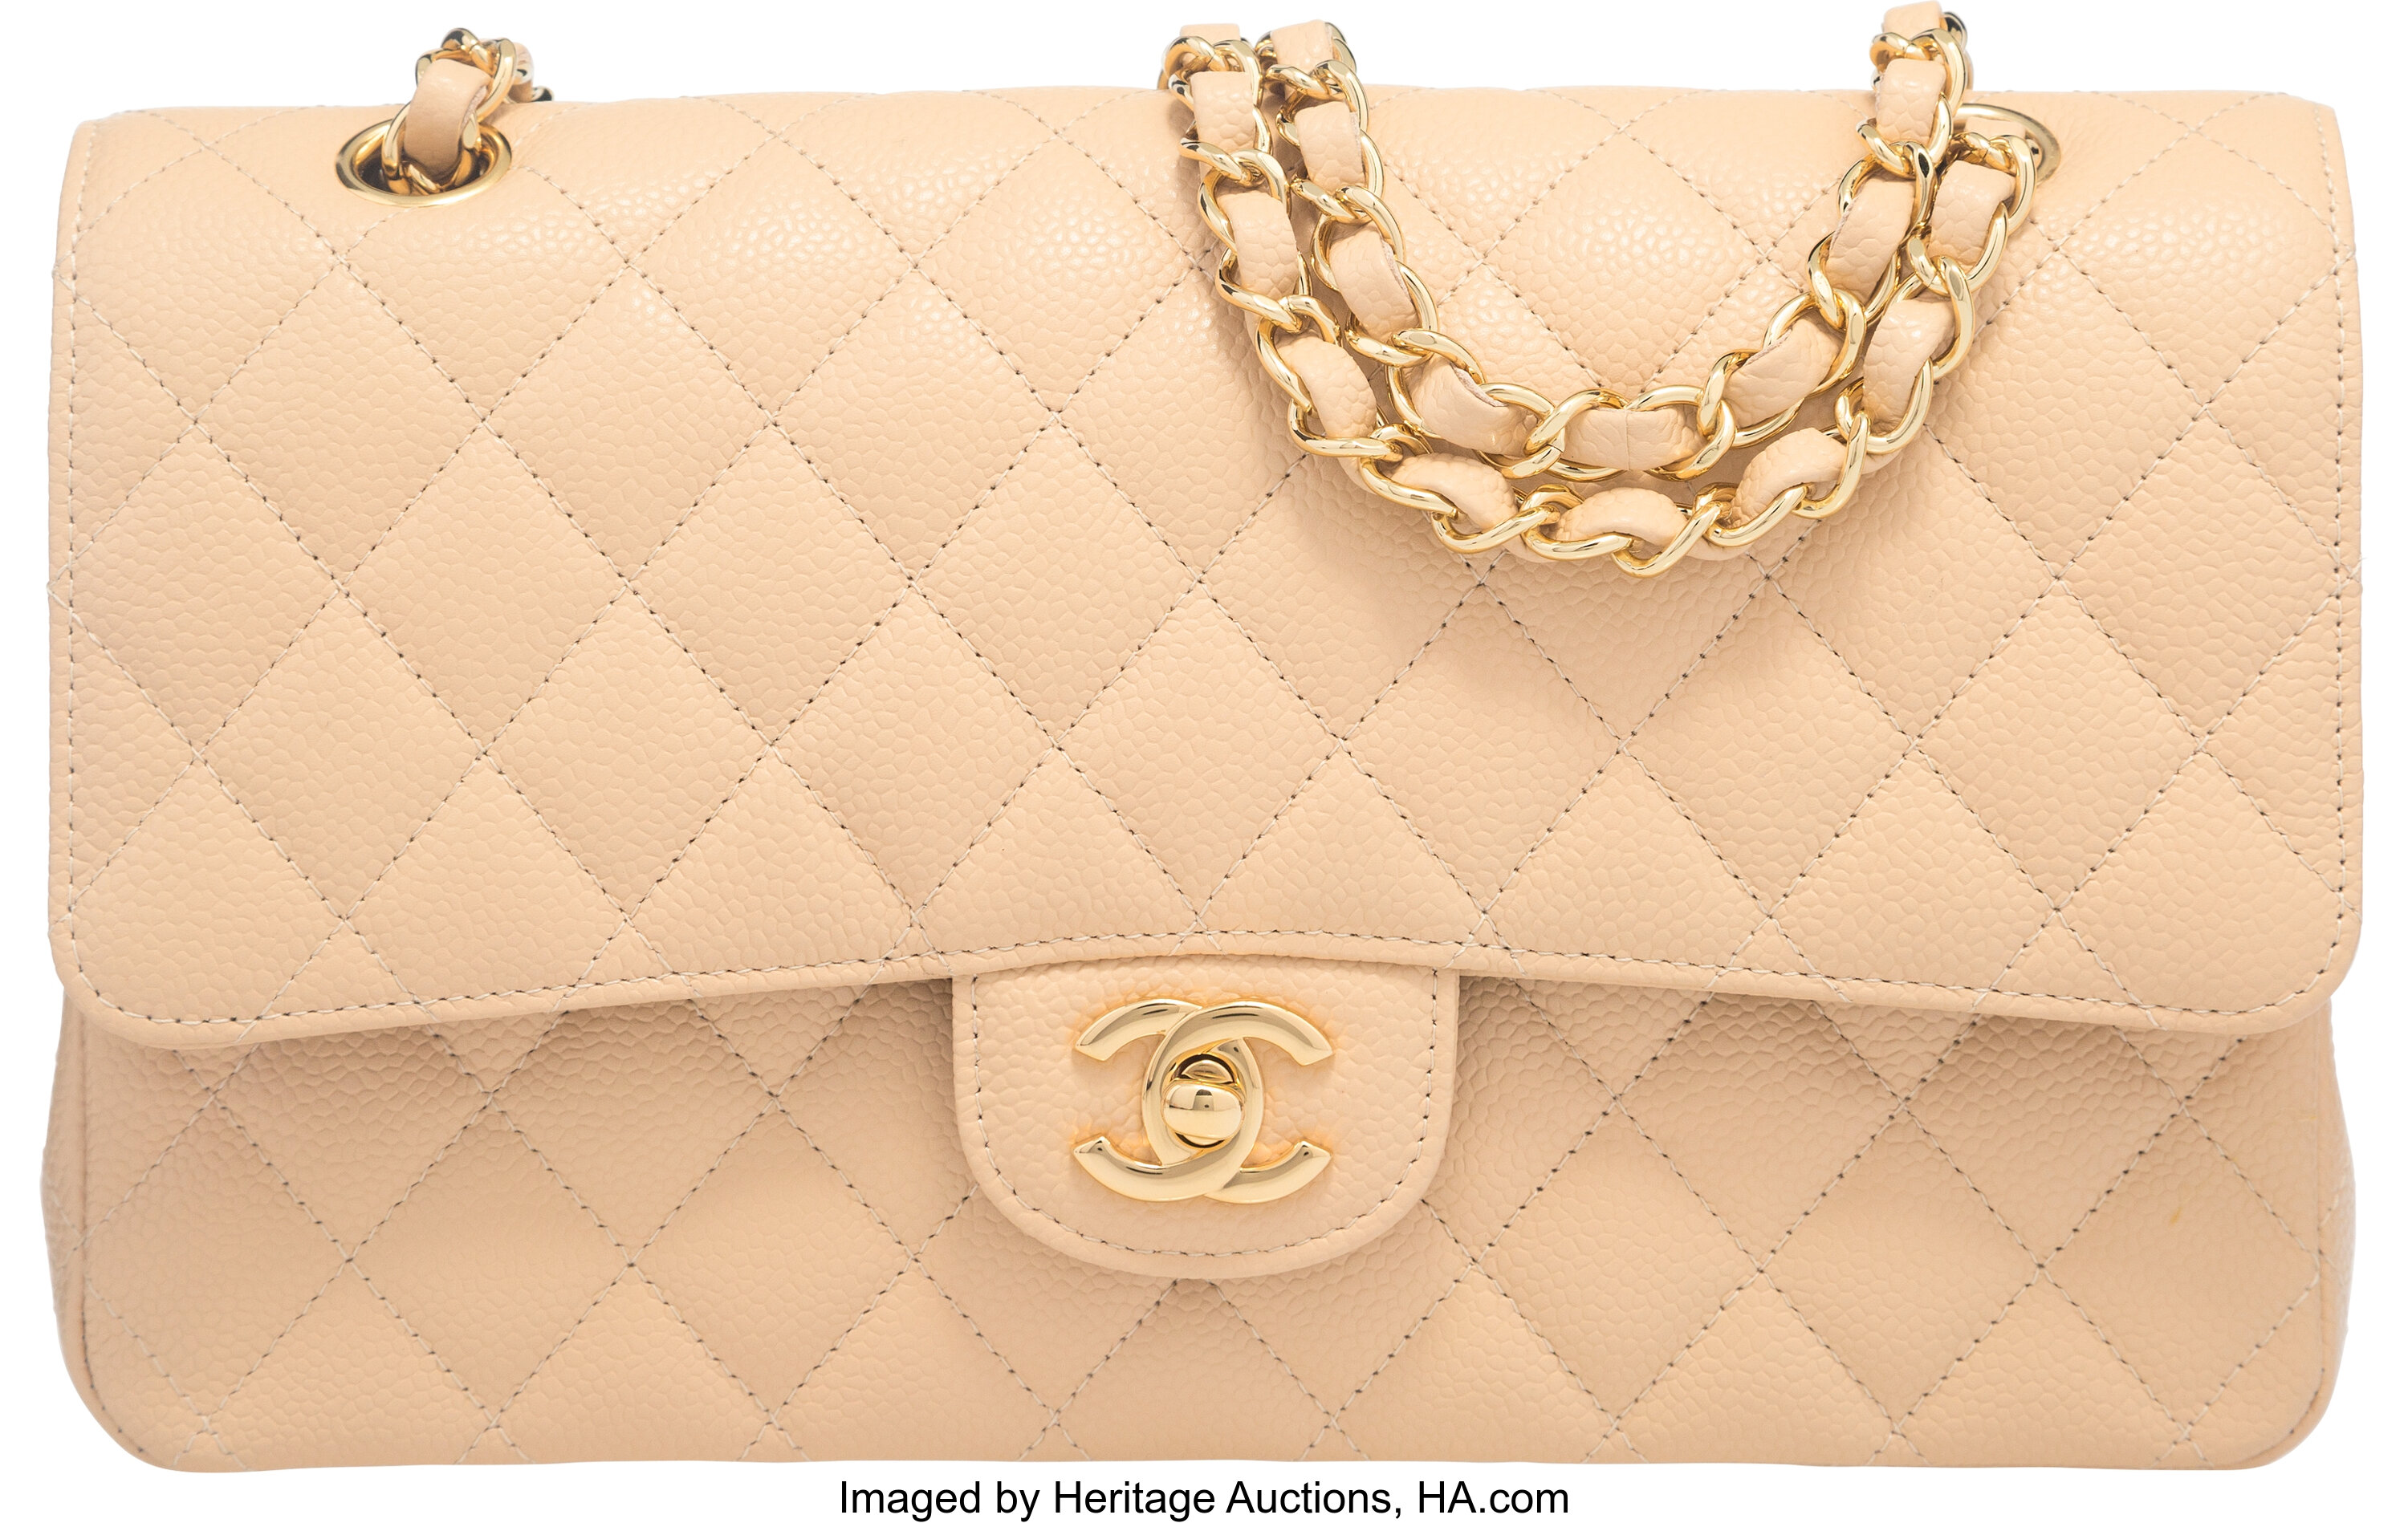 Chanel Beige Clair Caviar Leather Medium Classic Flap Bag